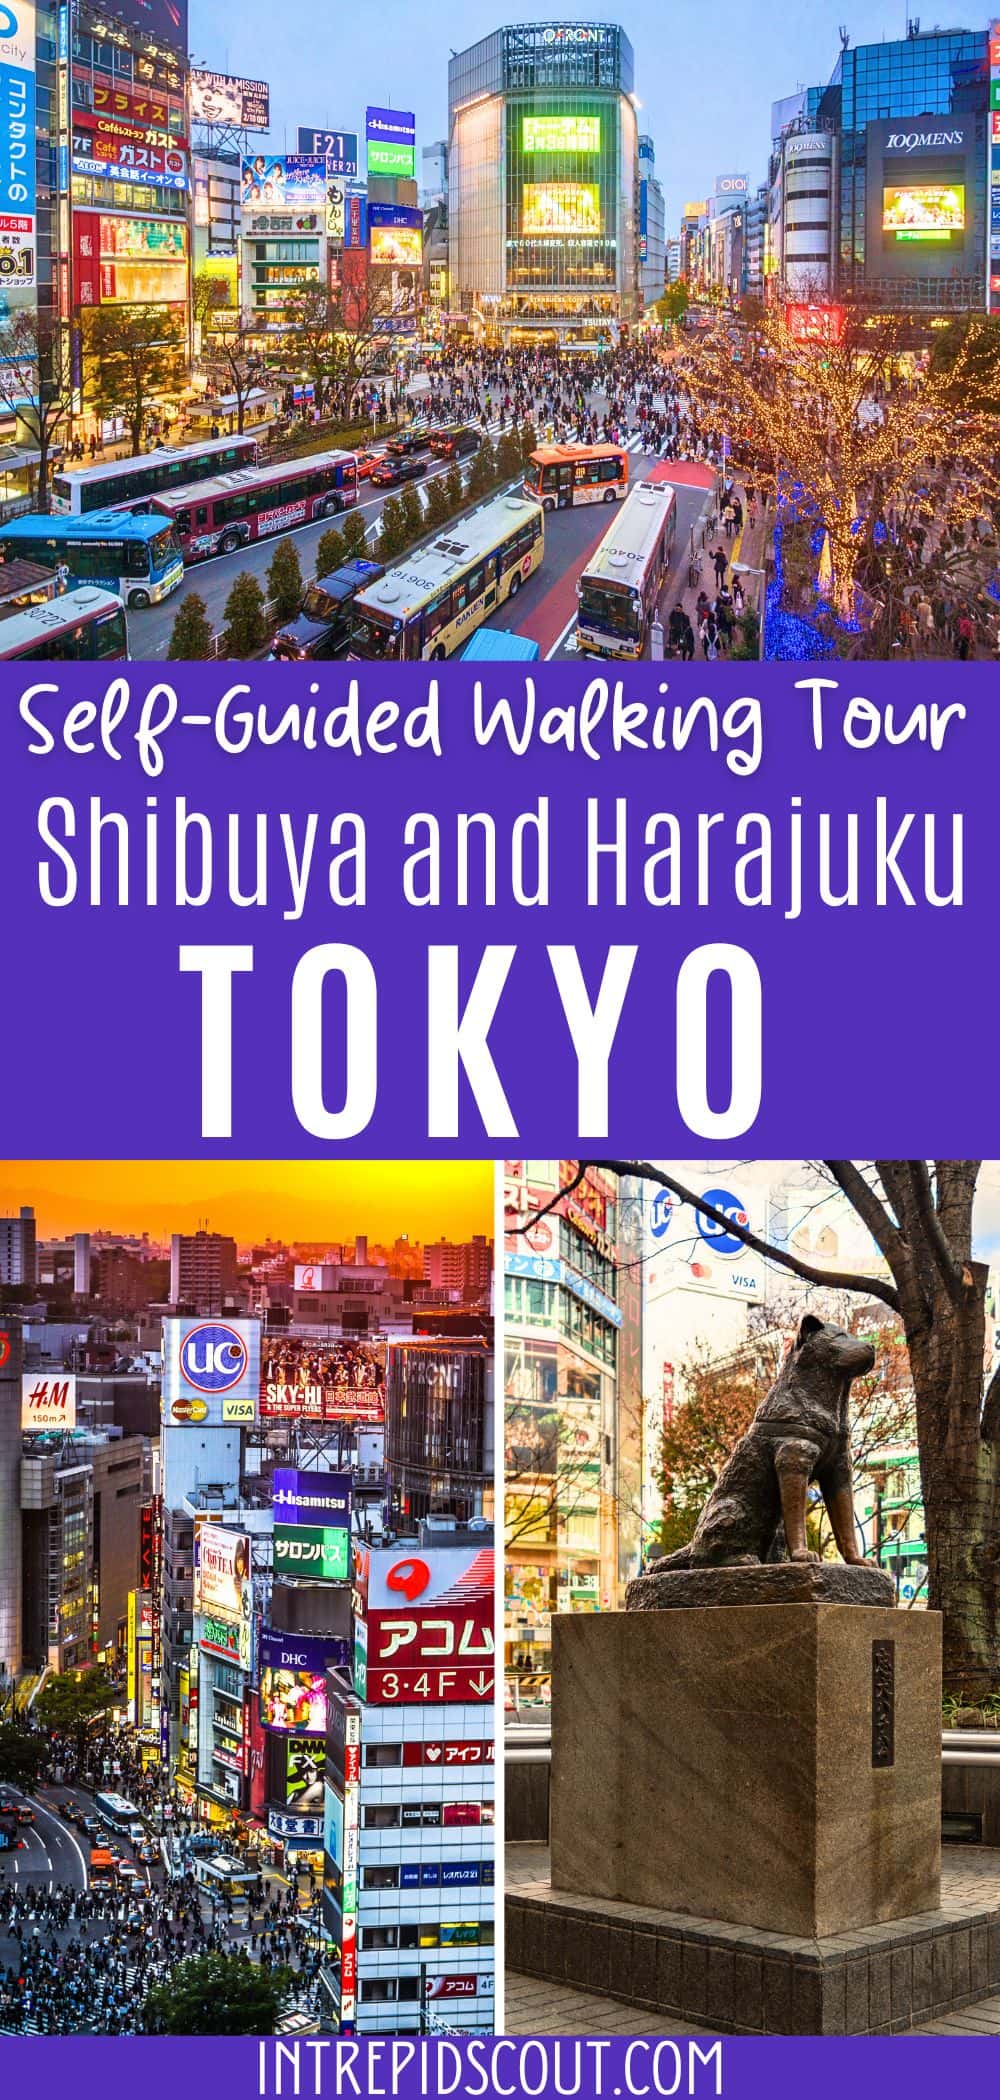 Shibuya and Harajuku Walking Tour